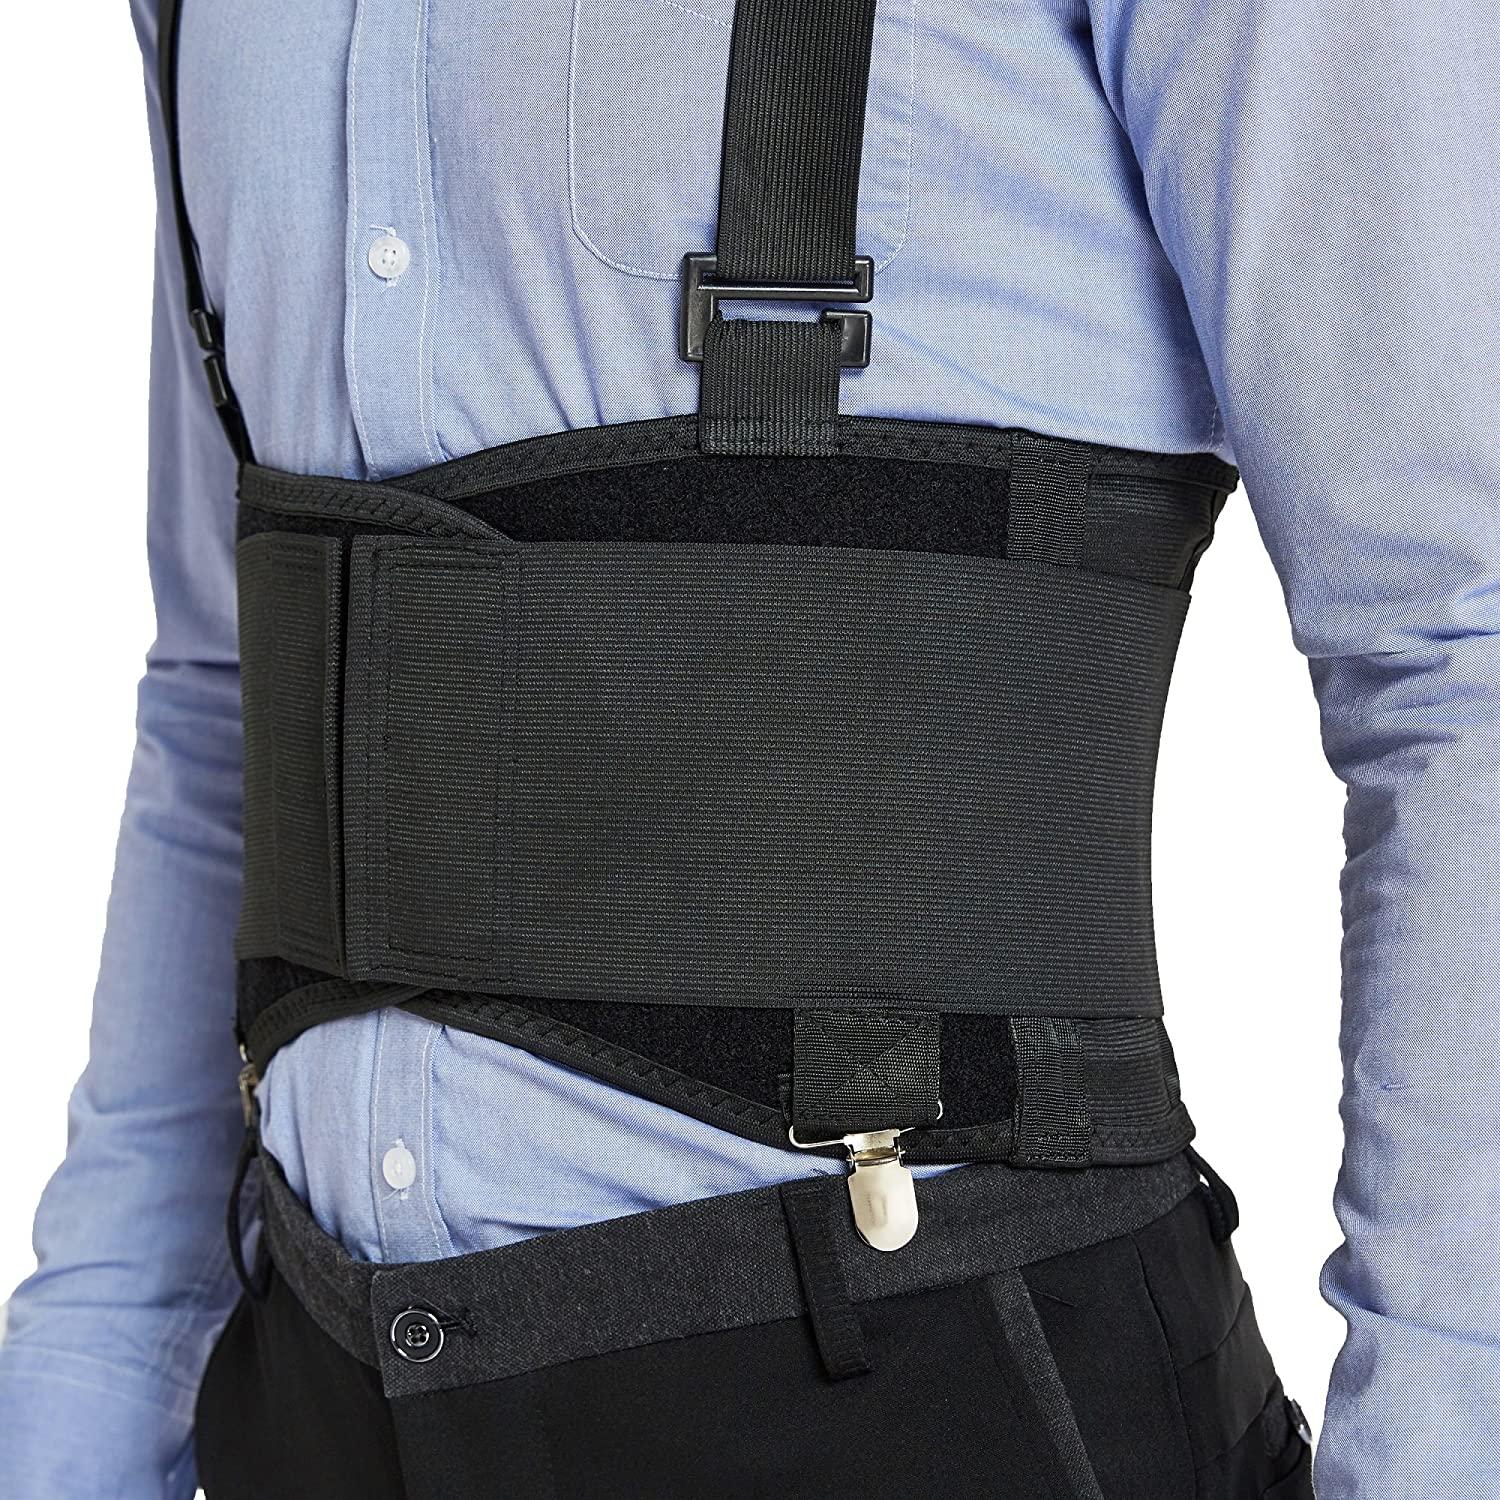 NeoTech Care Lumbar Brace with Removable Pants Clips & Detachable Suspenders  - Back Support Belt - Adjustable, Light, Breathable - Shoulder Holsters -  Work, Posture - Black (Size L) Large (Pack of 1)